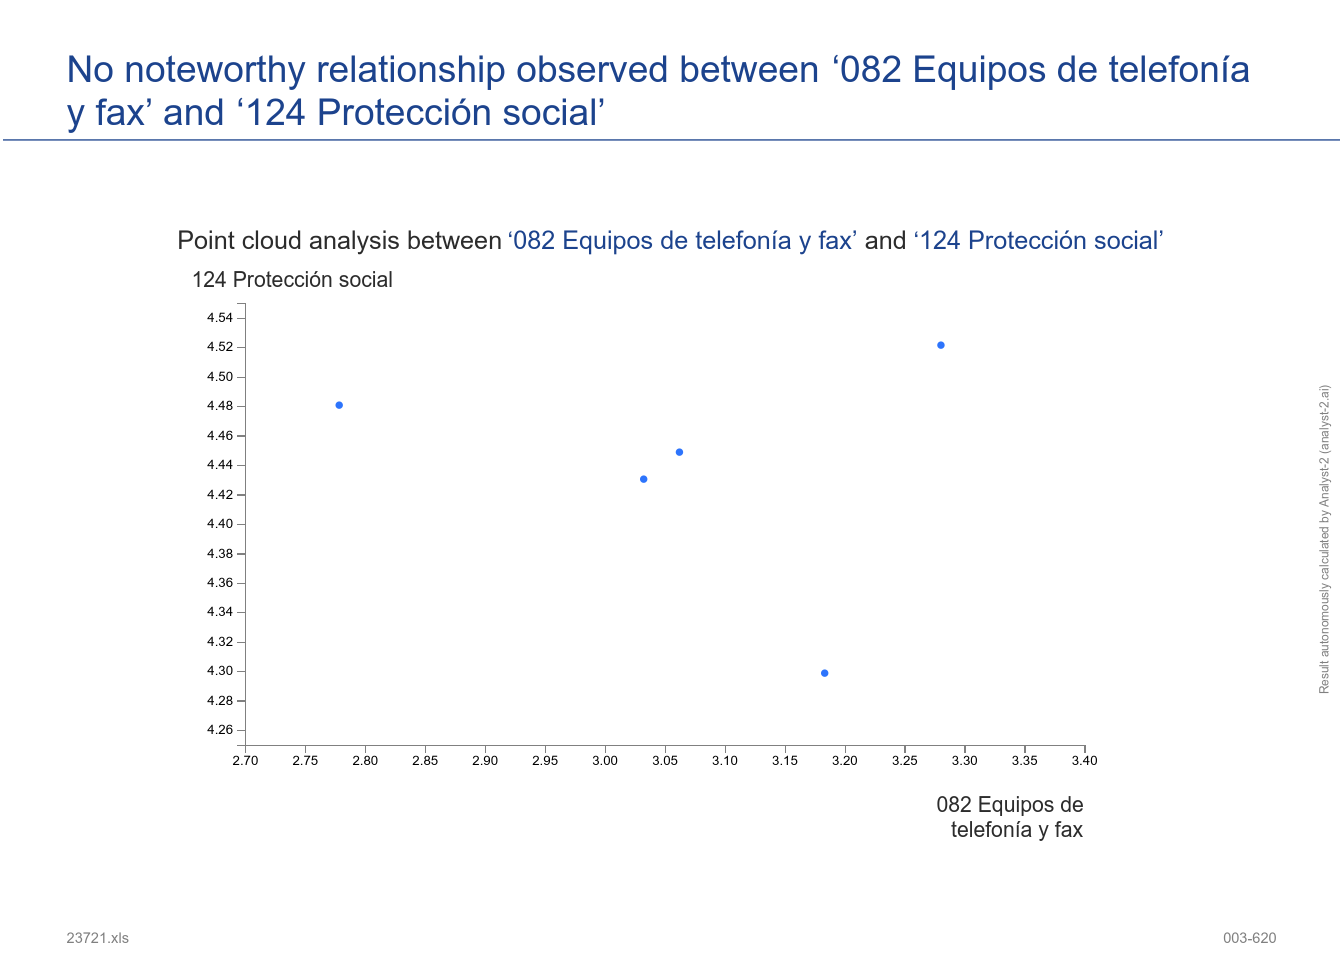 No noteworthy relationship observed between ‘082 Equipos de telefonía y fax’ and ‘124 Protección social’. (Subgroup weightings. IPC (API identifier: 23721) - 003-620)